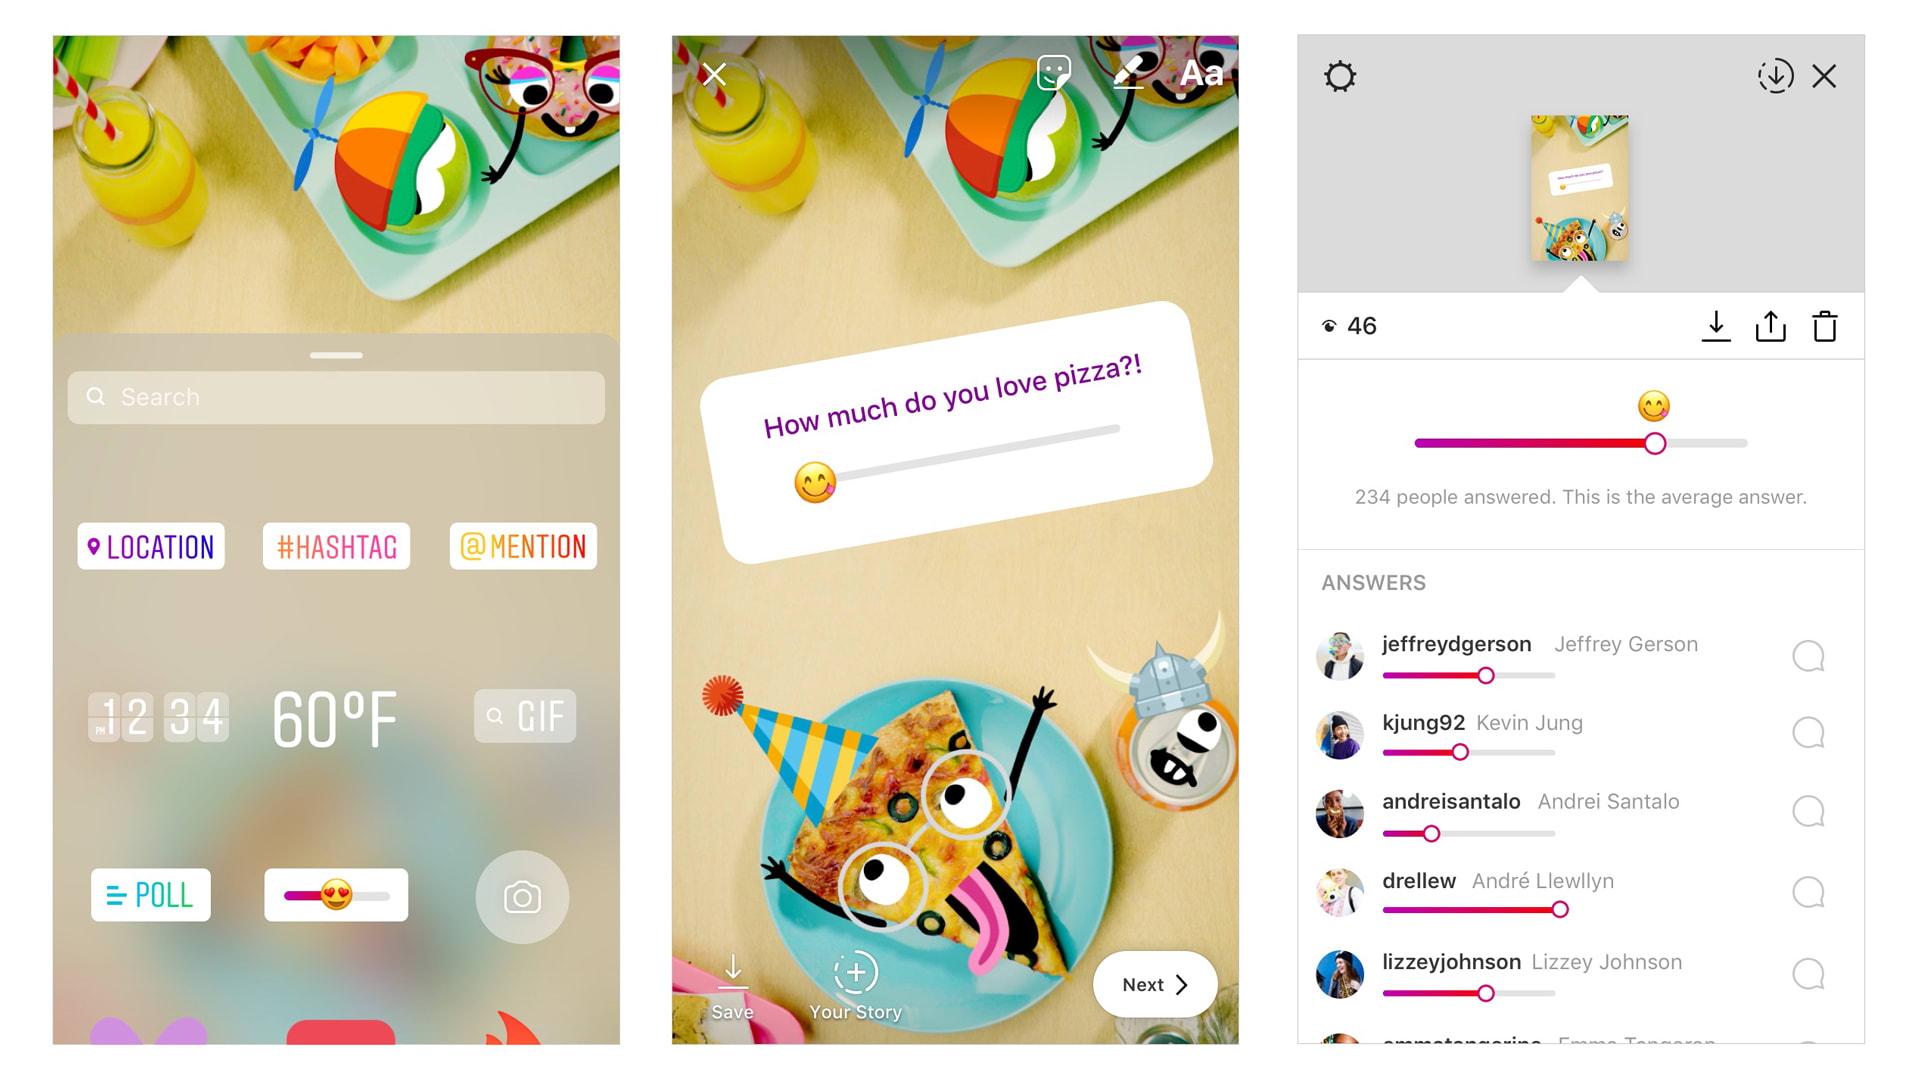 Instagram’s new “emoji slider” is a fresh take on polls